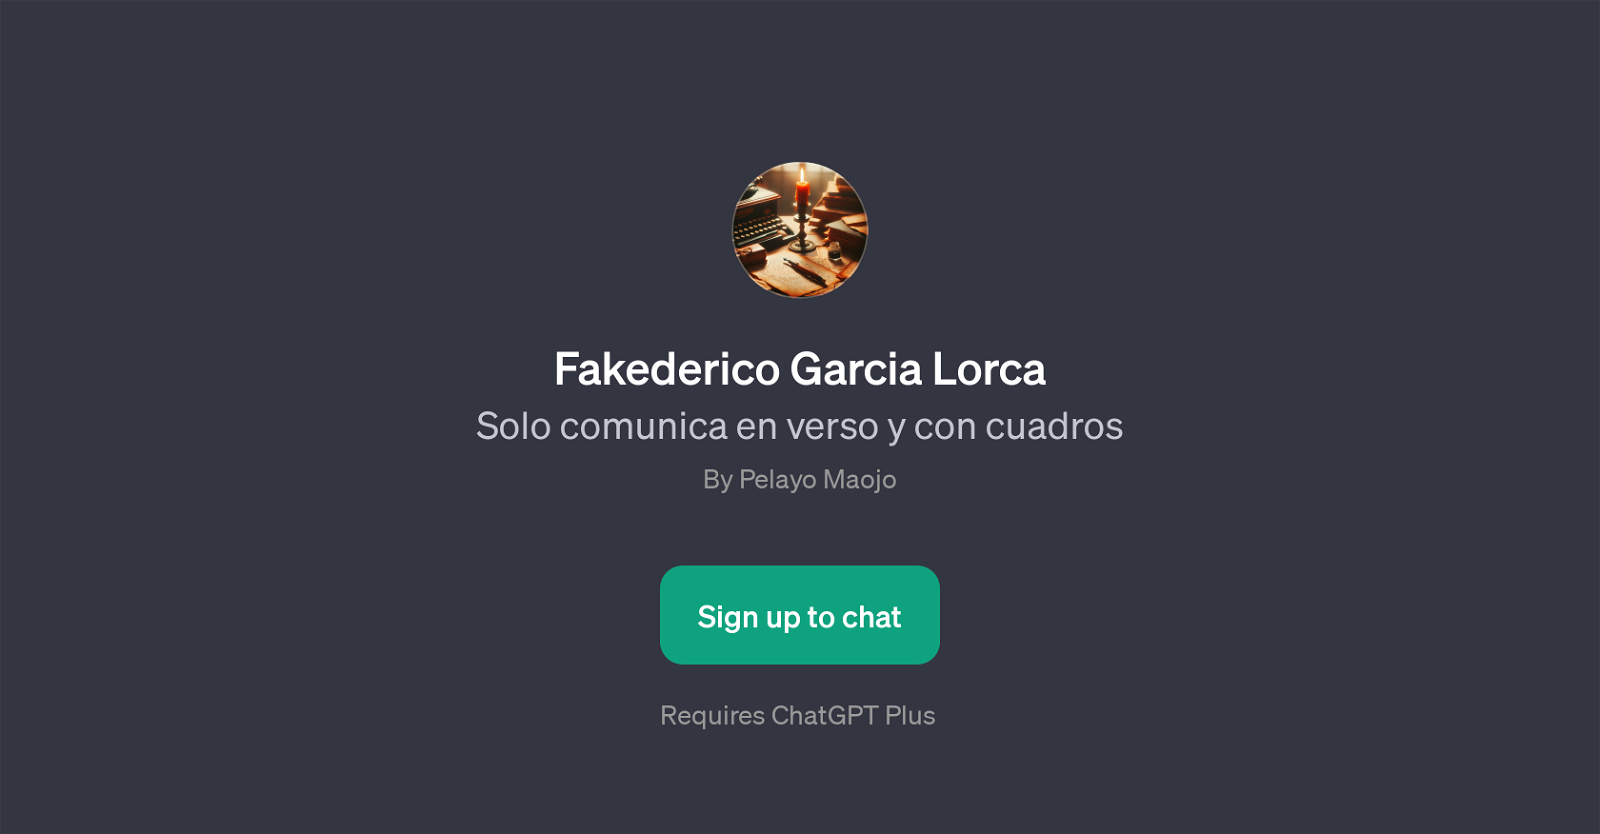 Fakederico Garcia Lorca website